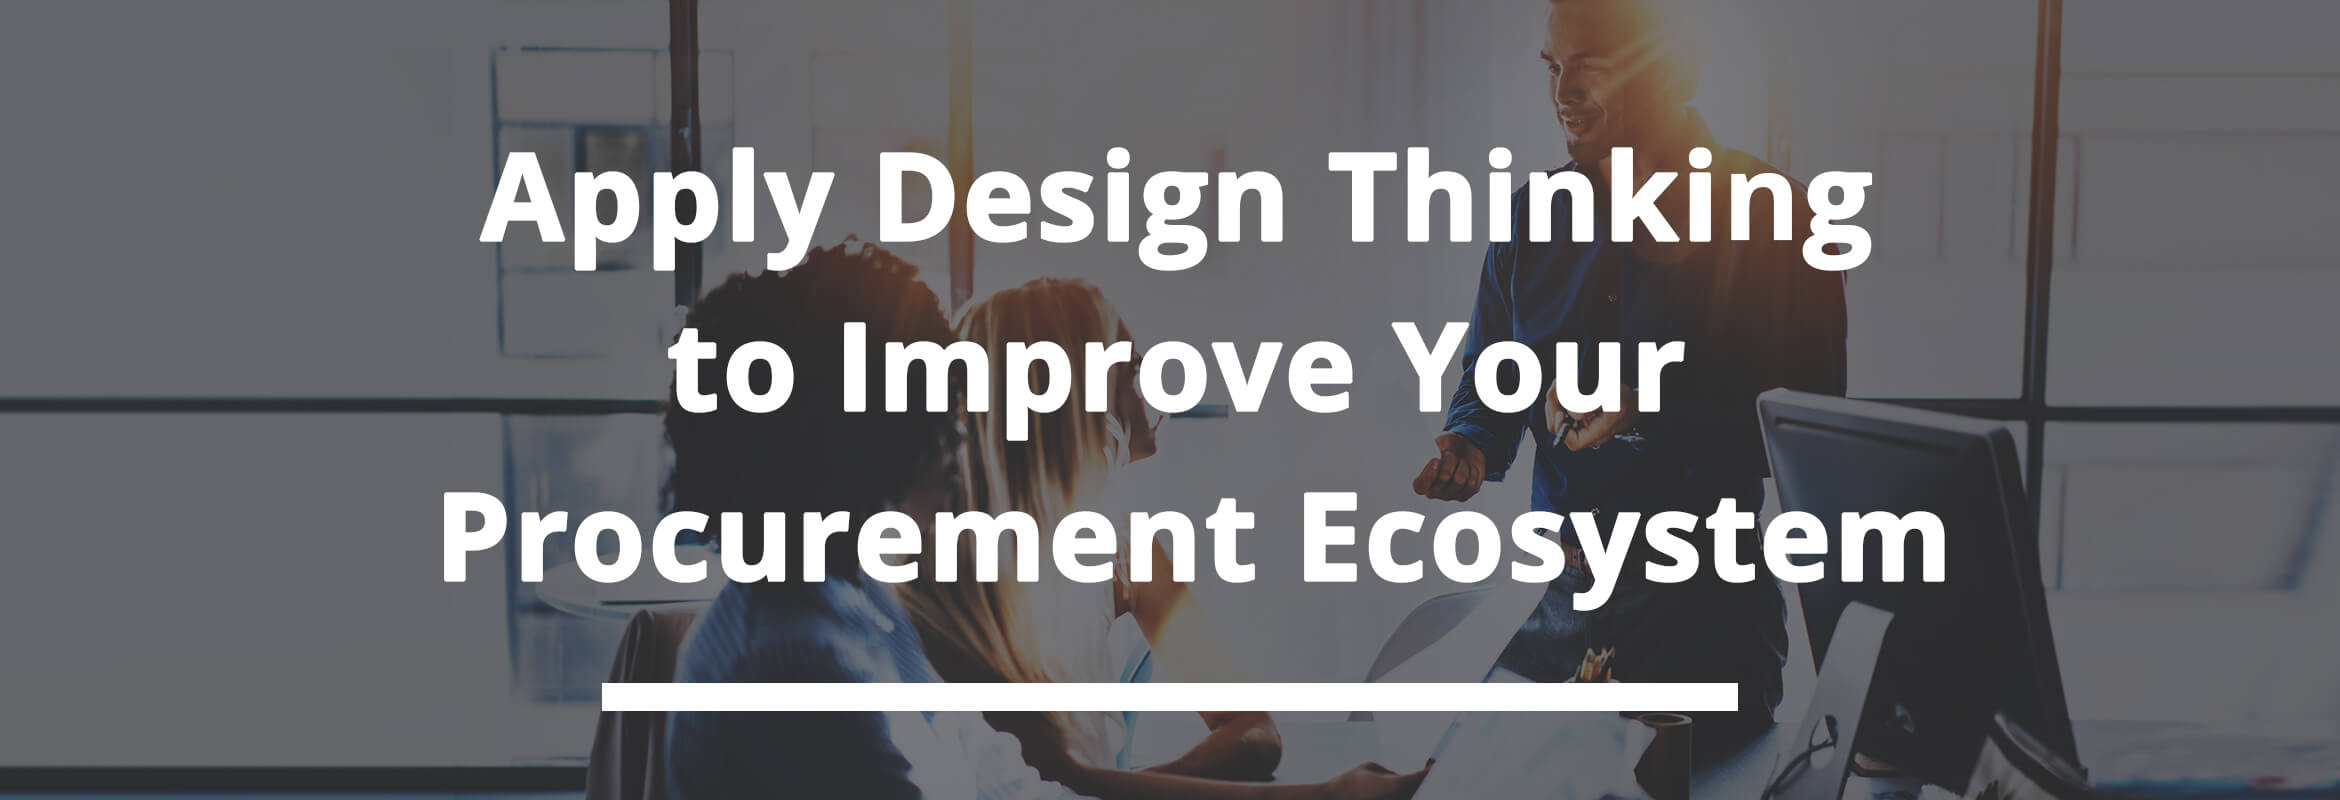 design thinking for procurement